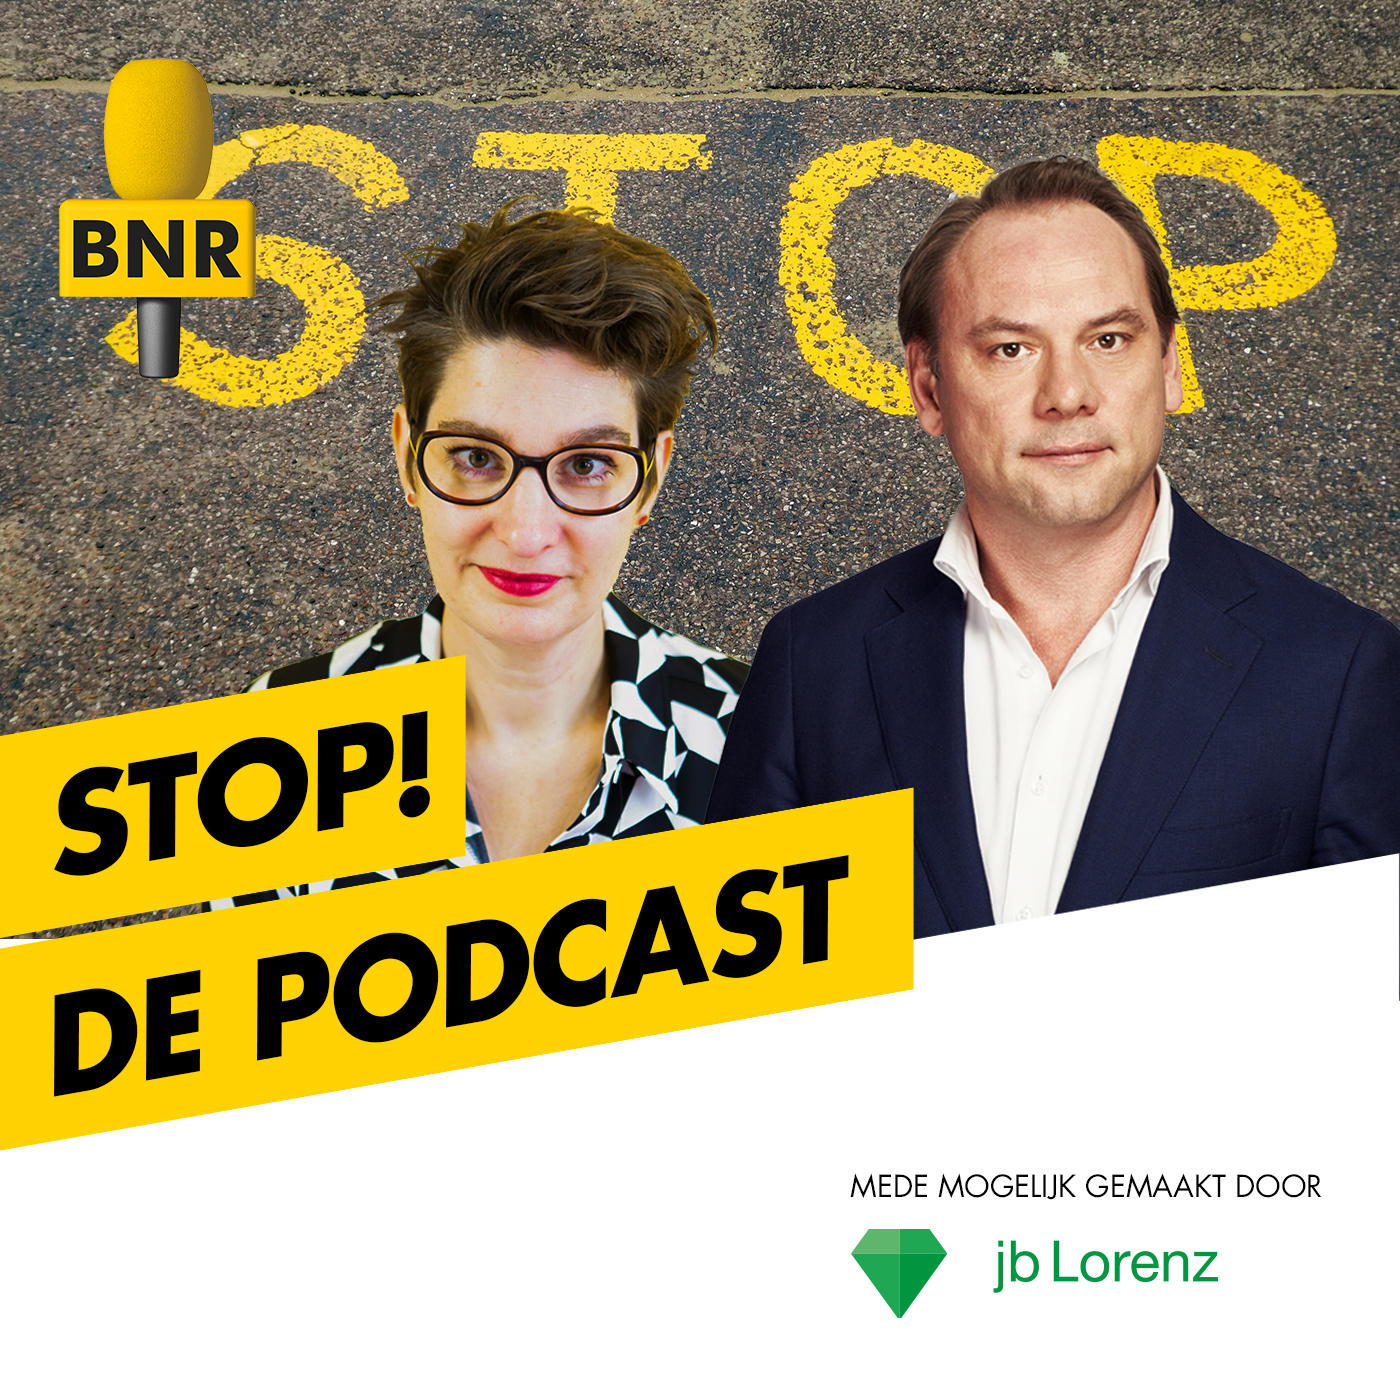 Stop! De podcast